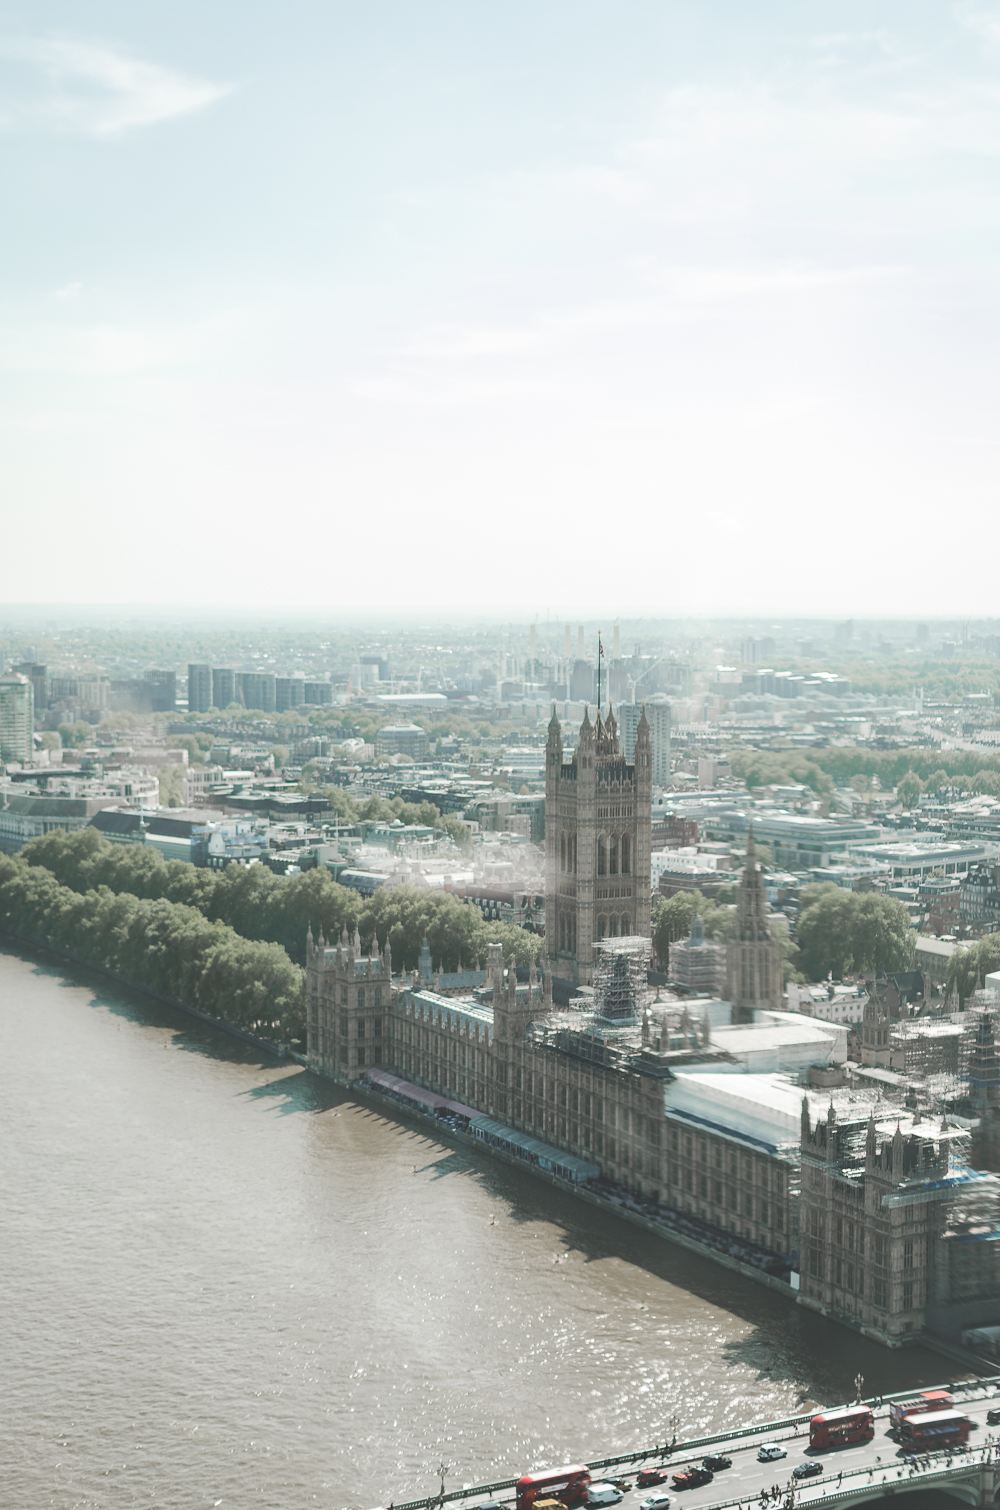 The London Eye-London Reise-Reiseblogger-andysparkles